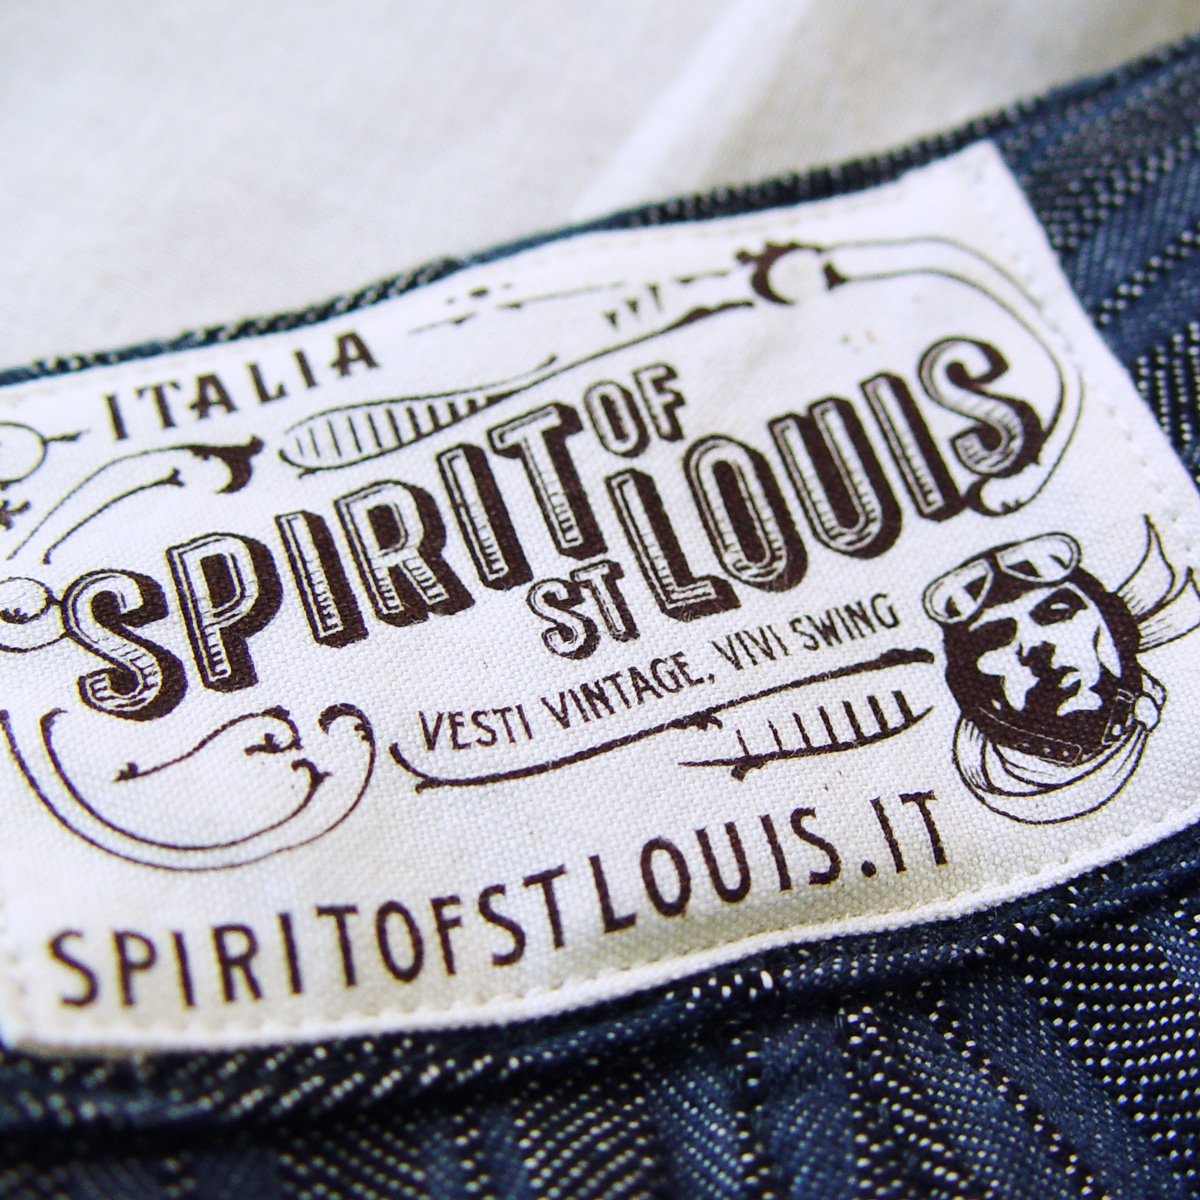 Etichetta pantalone retrò, Spirit of St. Louis